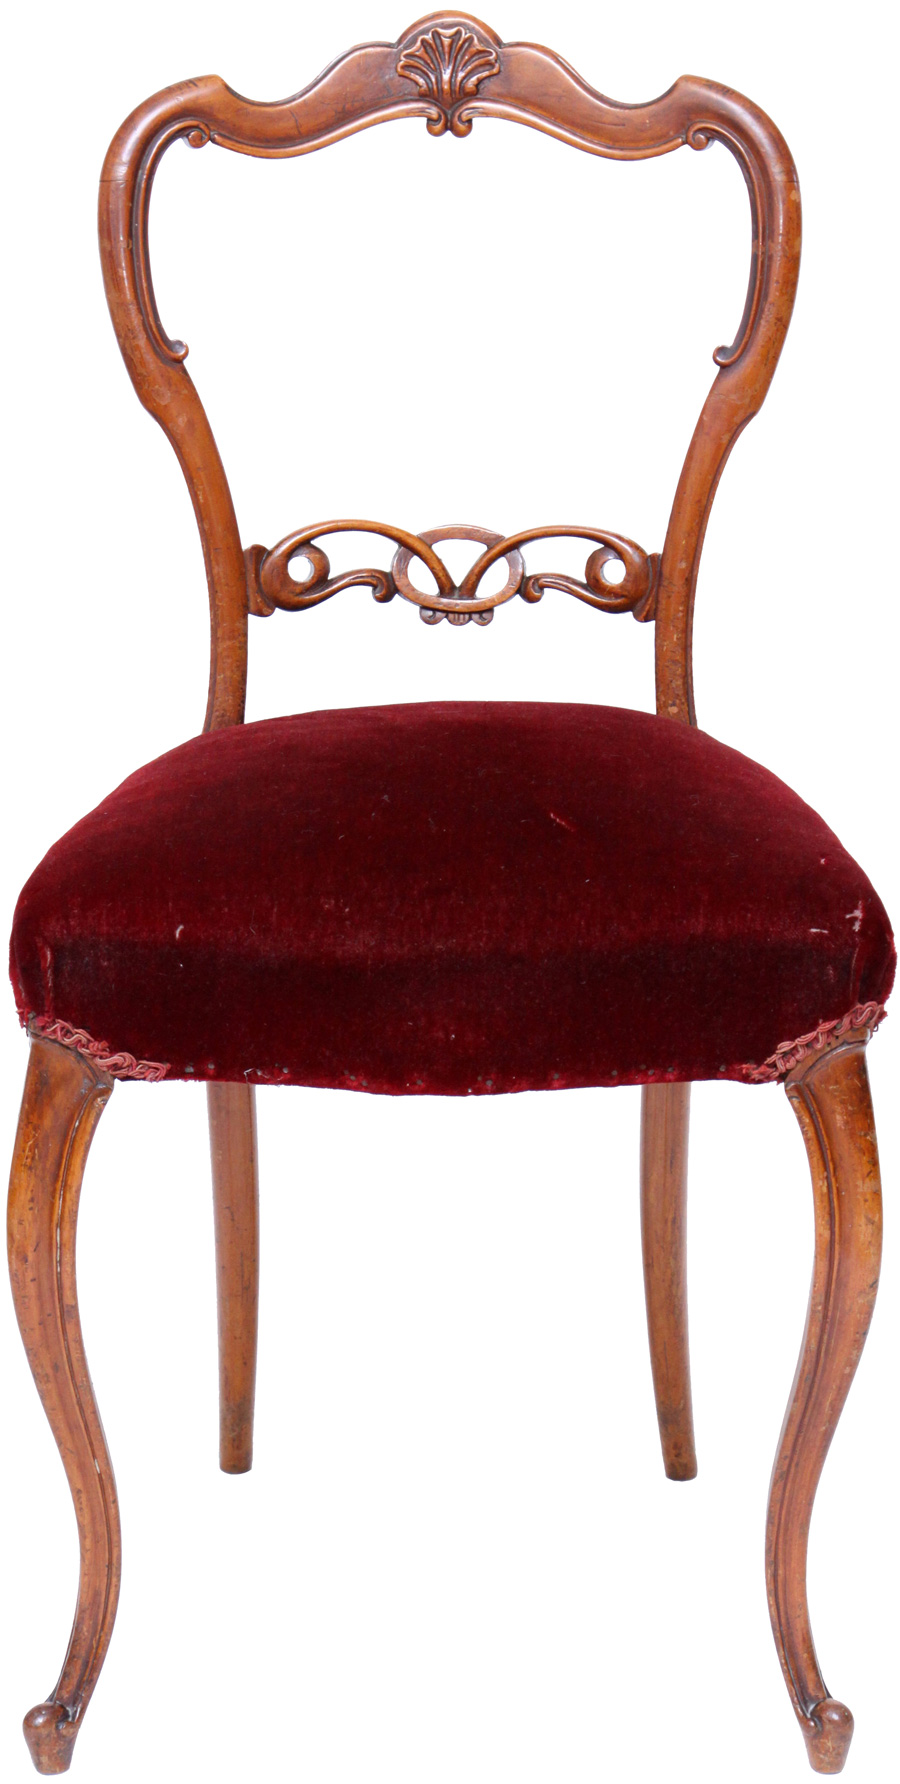 Genuine Antique Victorian Balloon Back Chair - Rosewood and Stuff-Over Seat - כיסא אנגלי ויקטוריאני עם גב דמוי בלון - Back To List of Antique Furniture